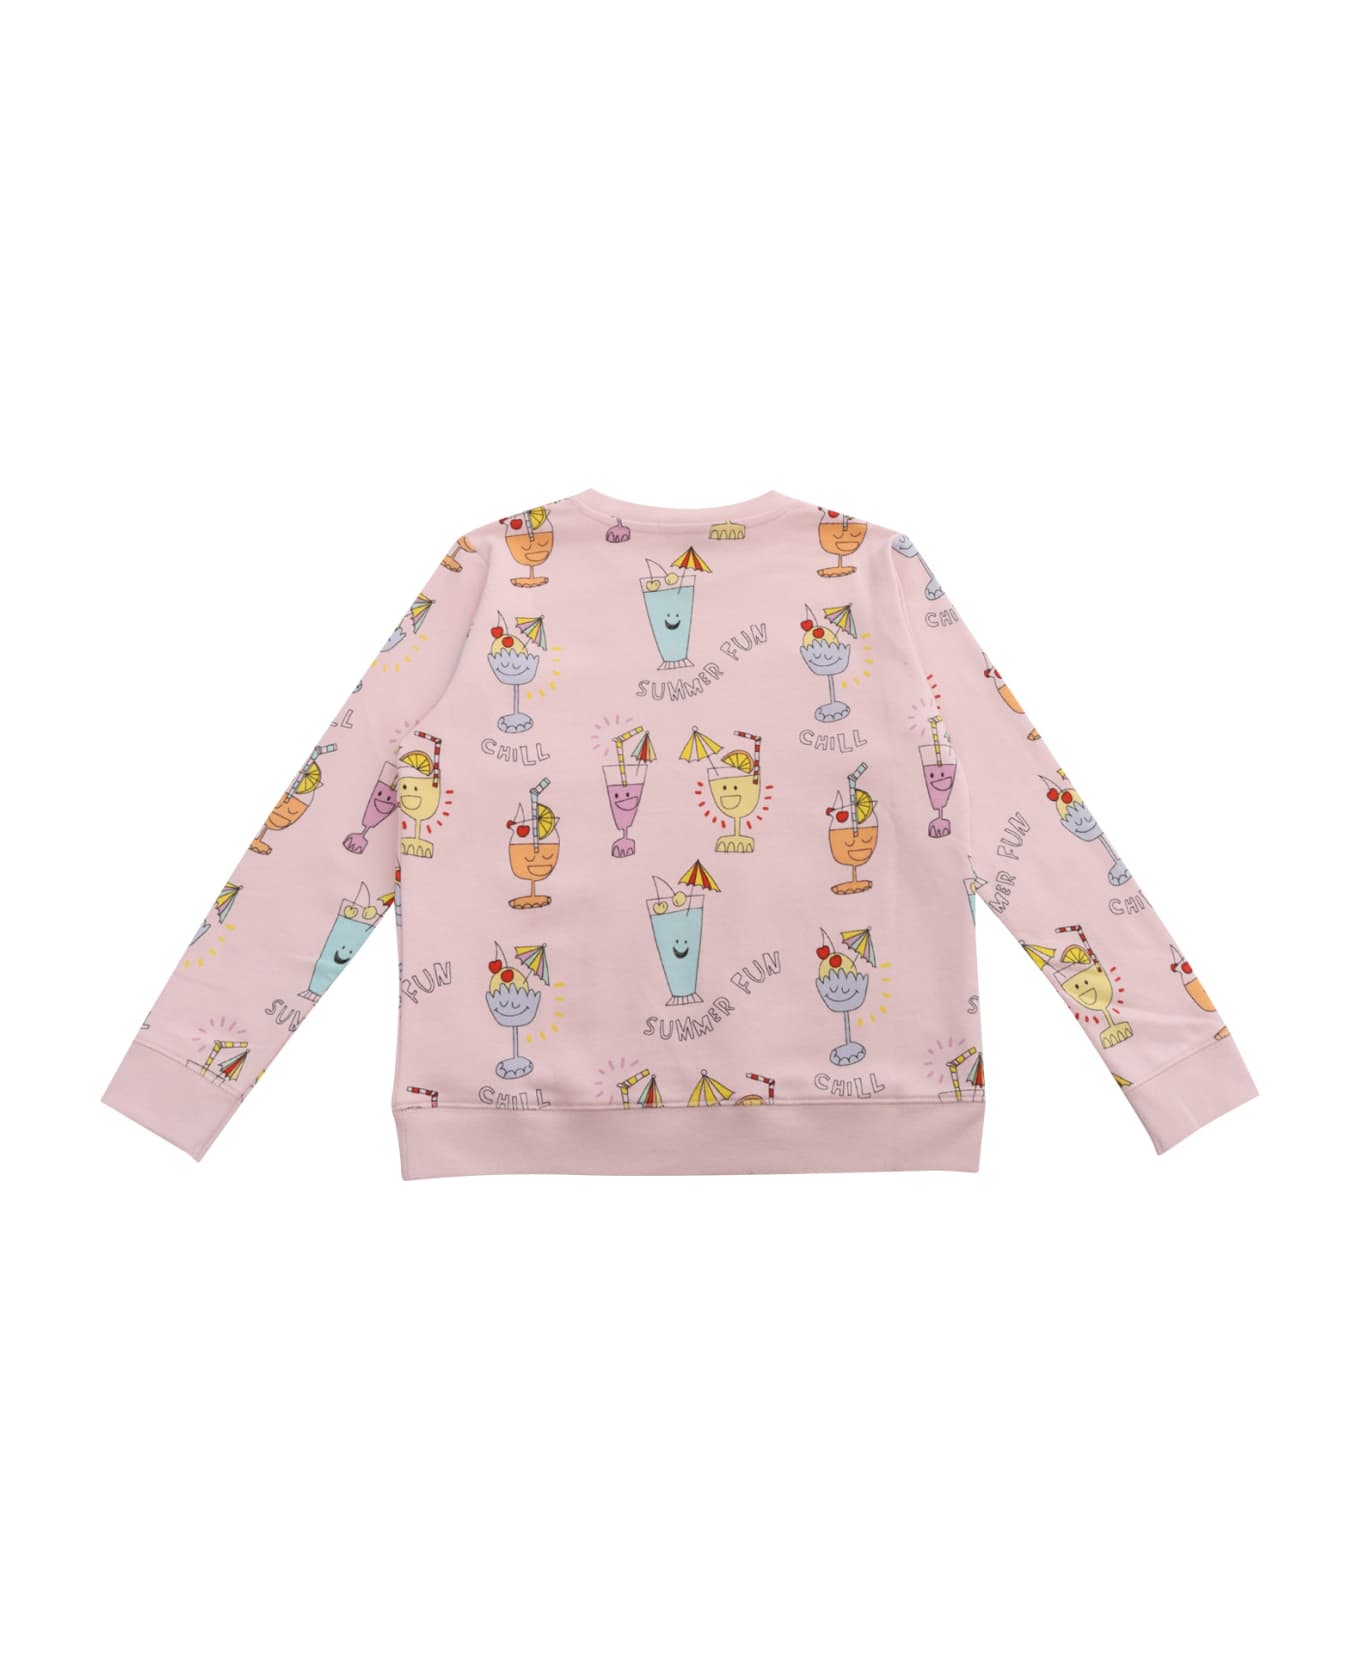 Stella McCartney Kids Pink Sweatshirt With Prints - PINK